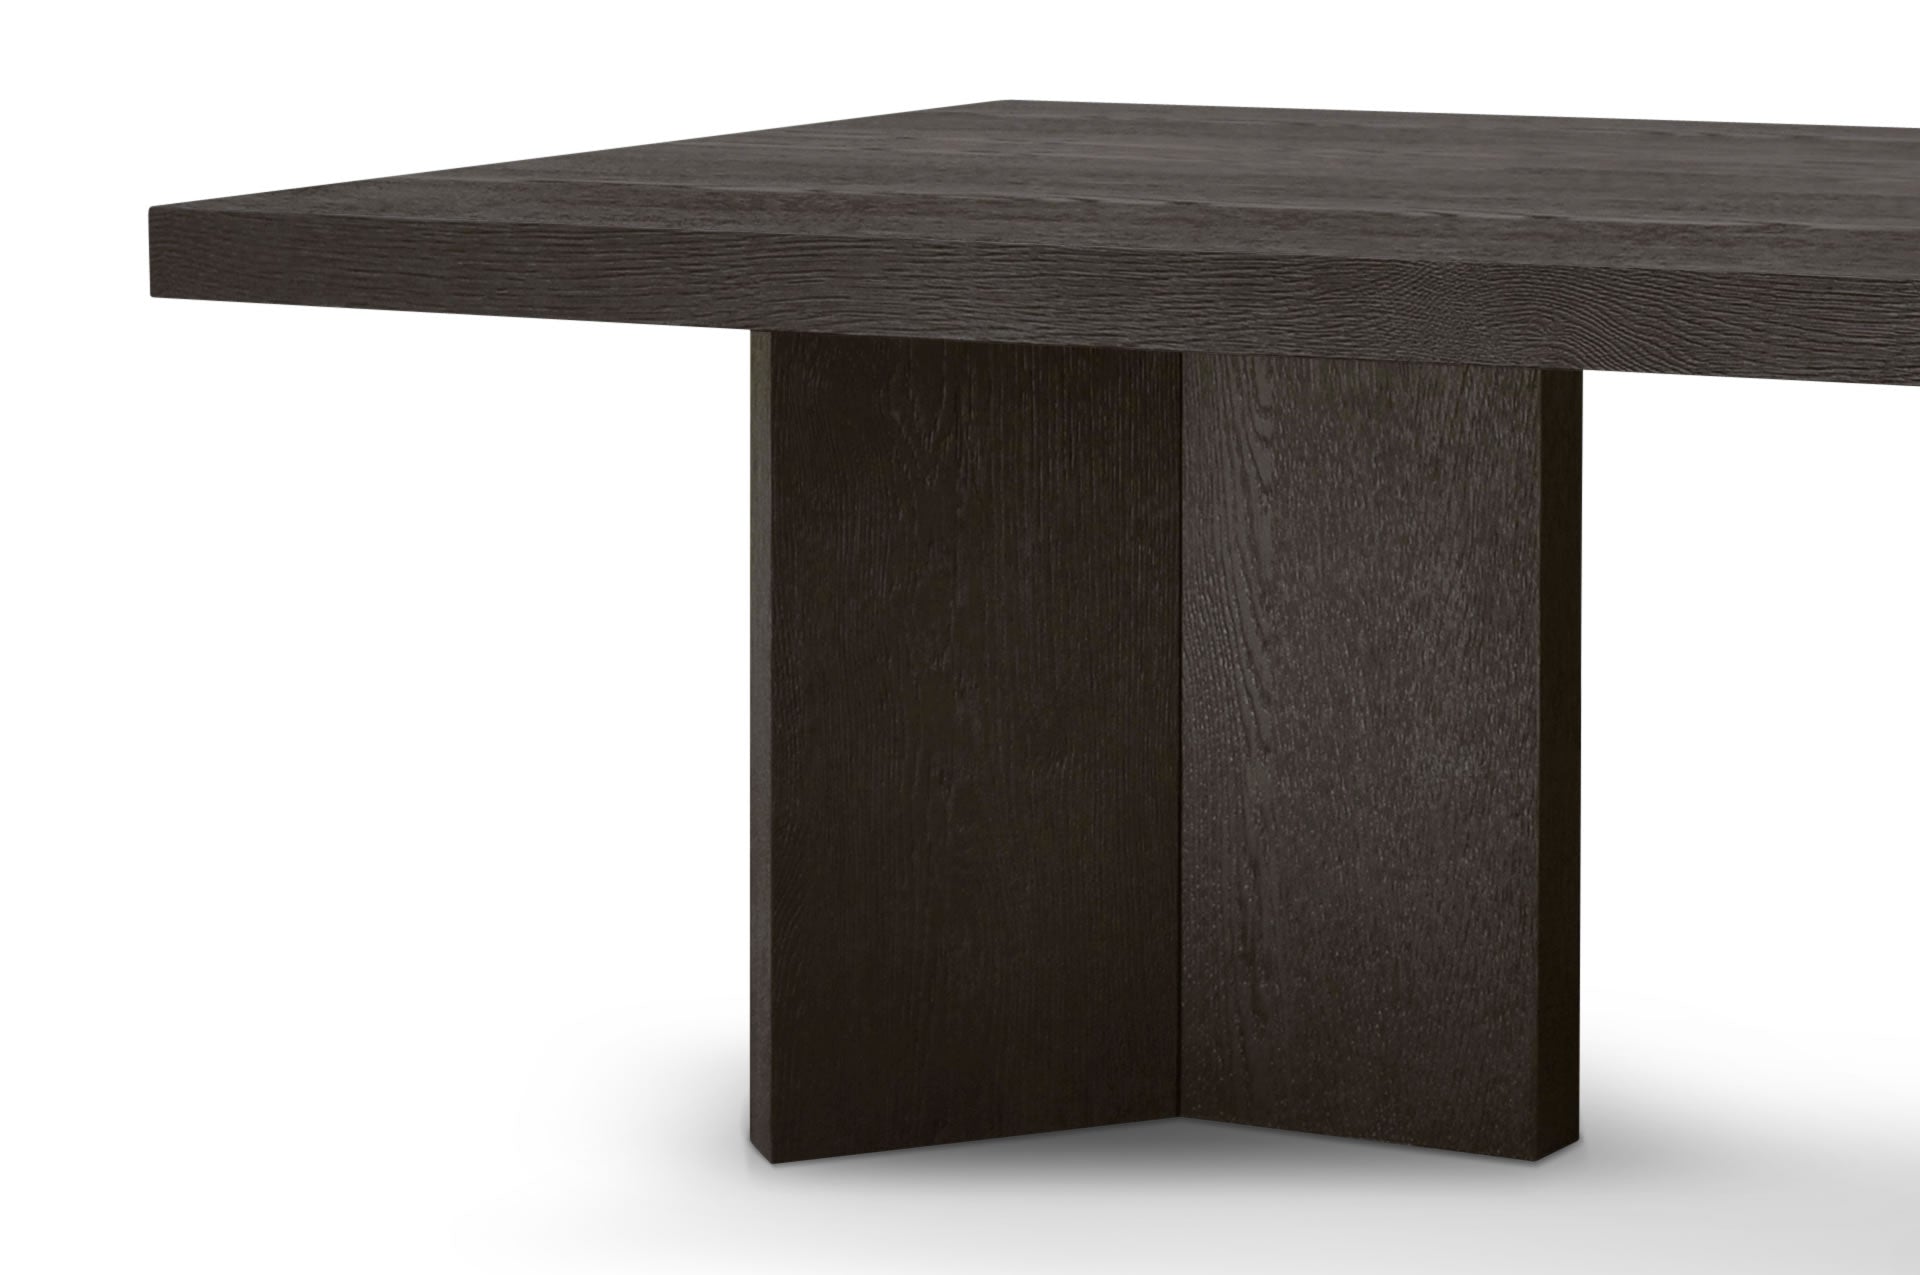 Berkeley Designs Sorrento 10-Seater Dining Table